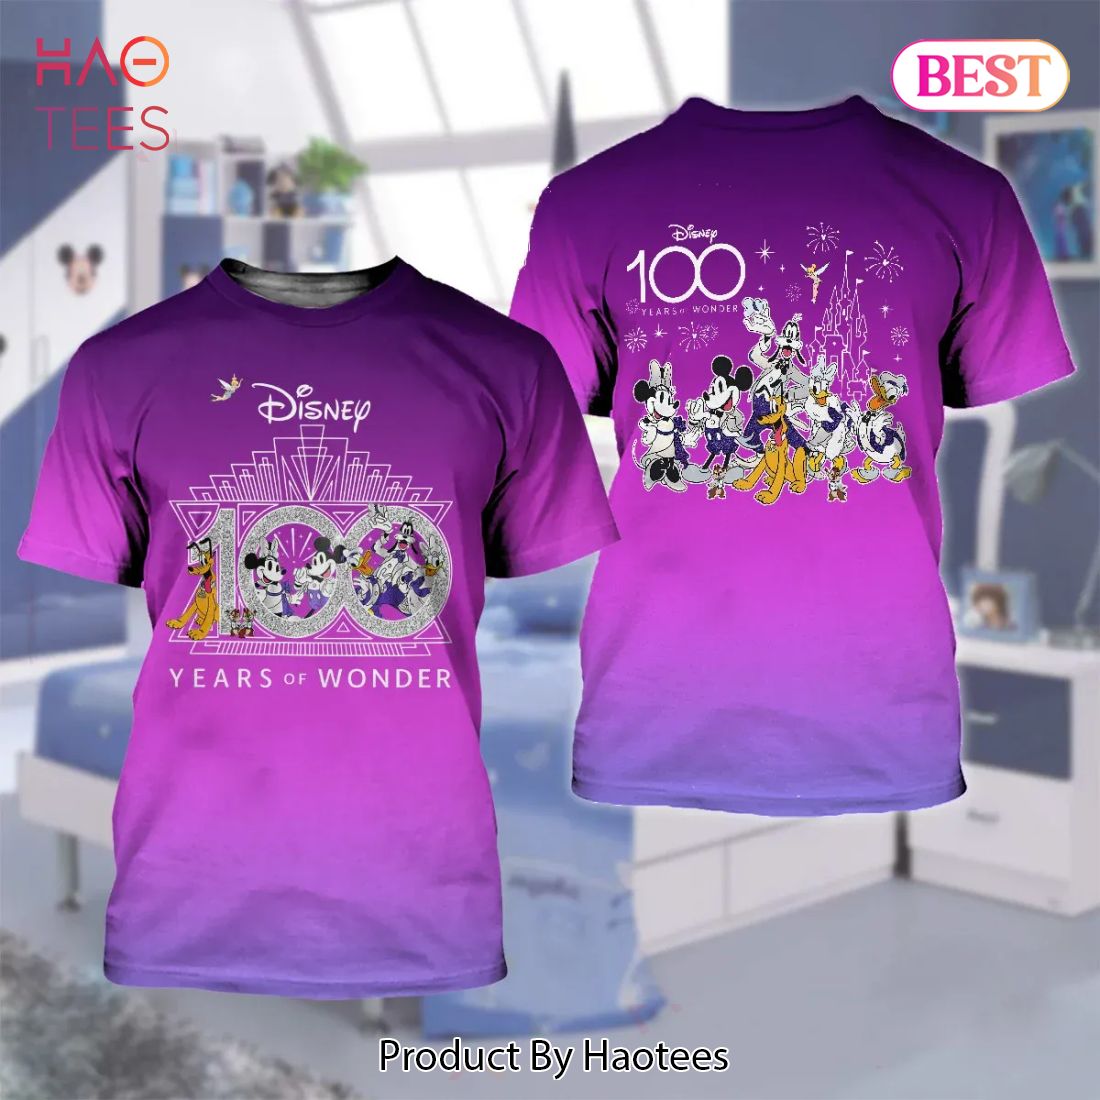 NEW FASHION] Disney 100 Years of Wonder Purple Luxury Brand T